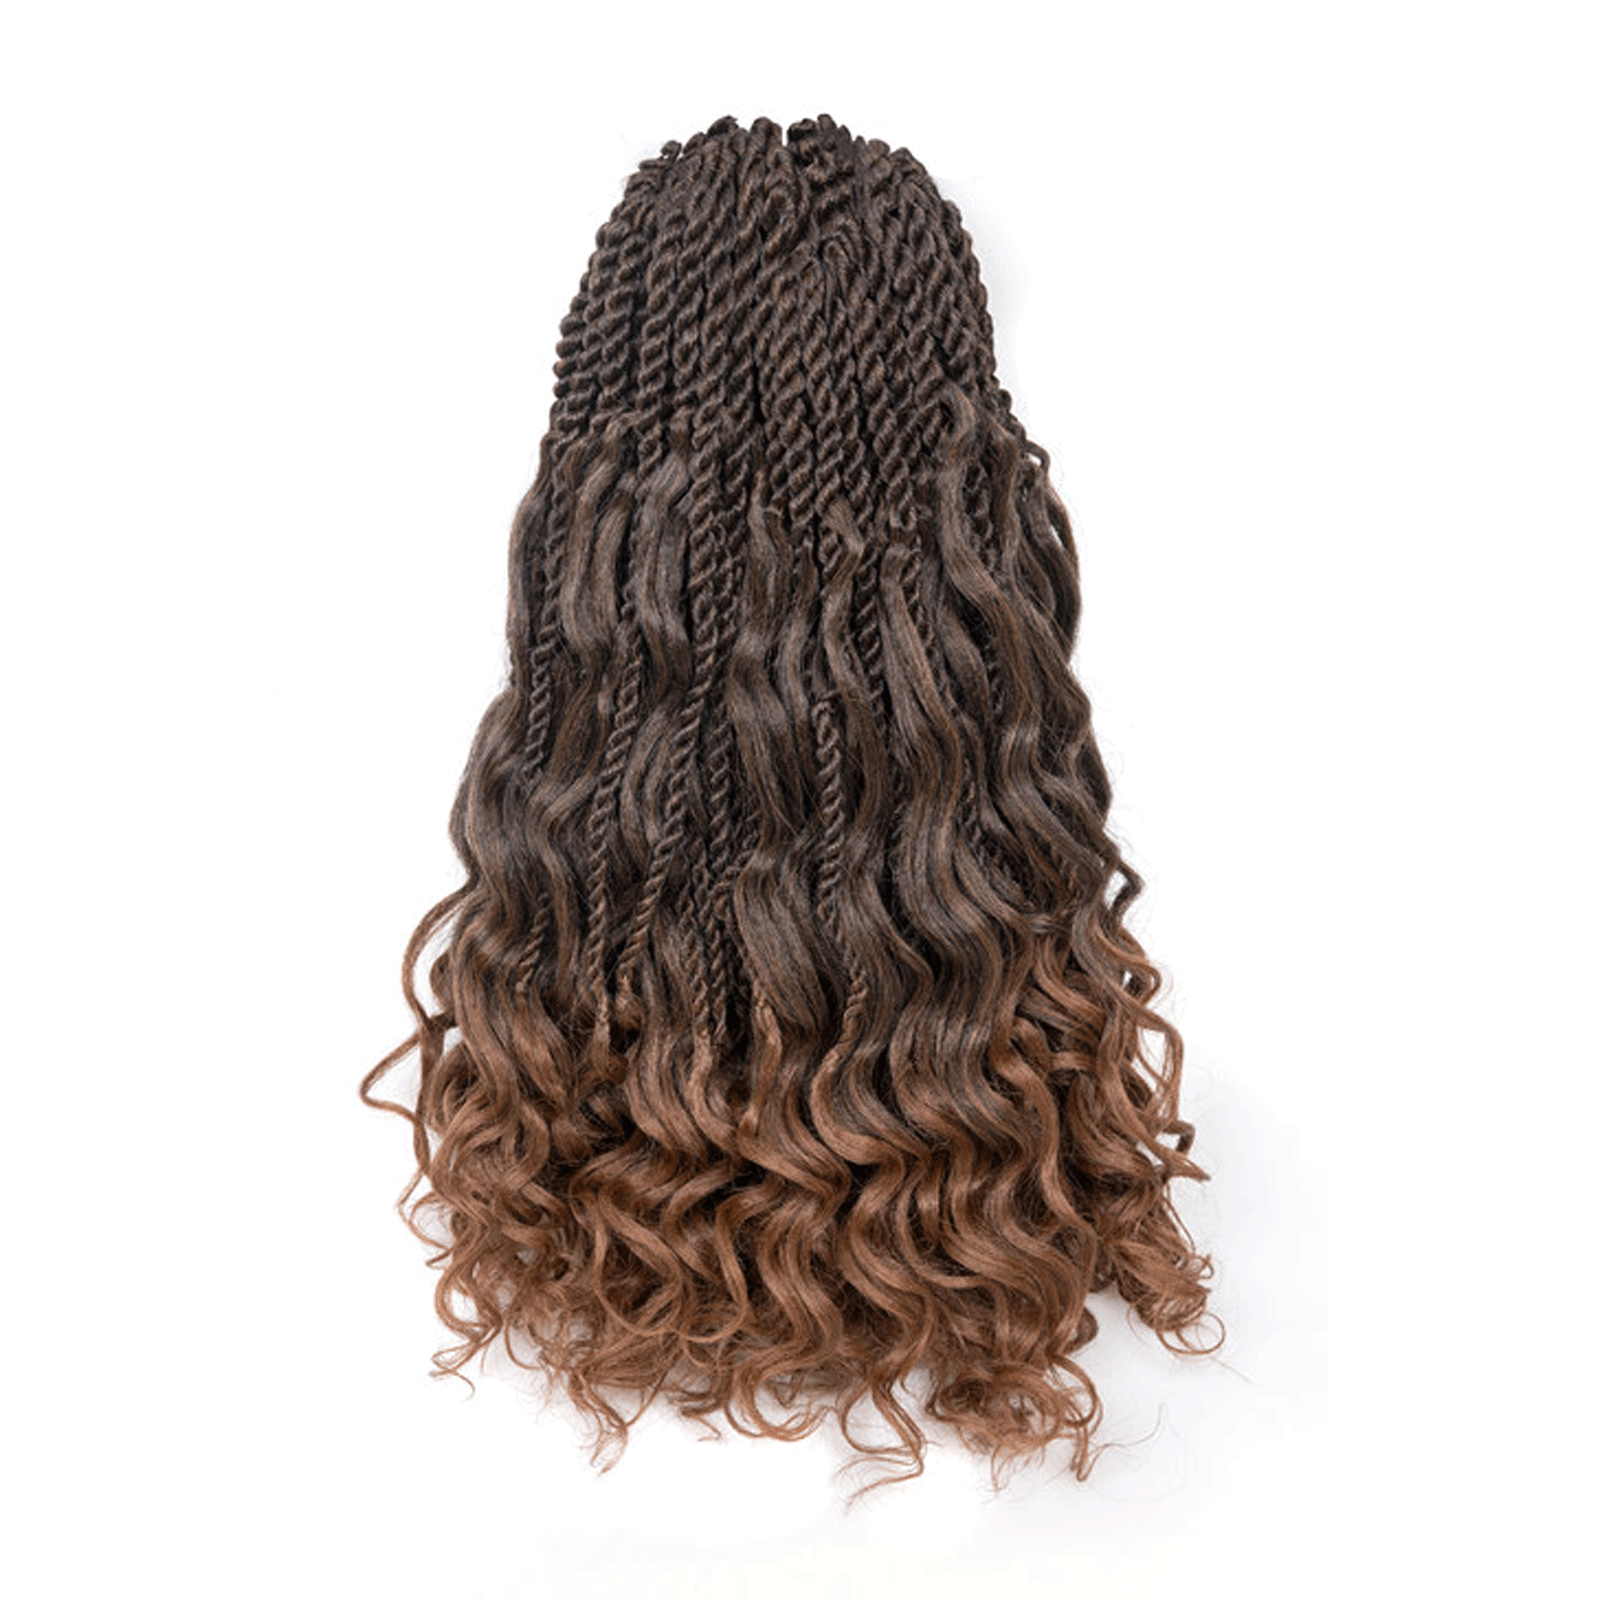 Toyotress Unique Boho Island Twist with Curls Crochet Hair 8 Packs | Crochet Senegalese Twist Pre Looped Braiding Hair Wth Curly Ends